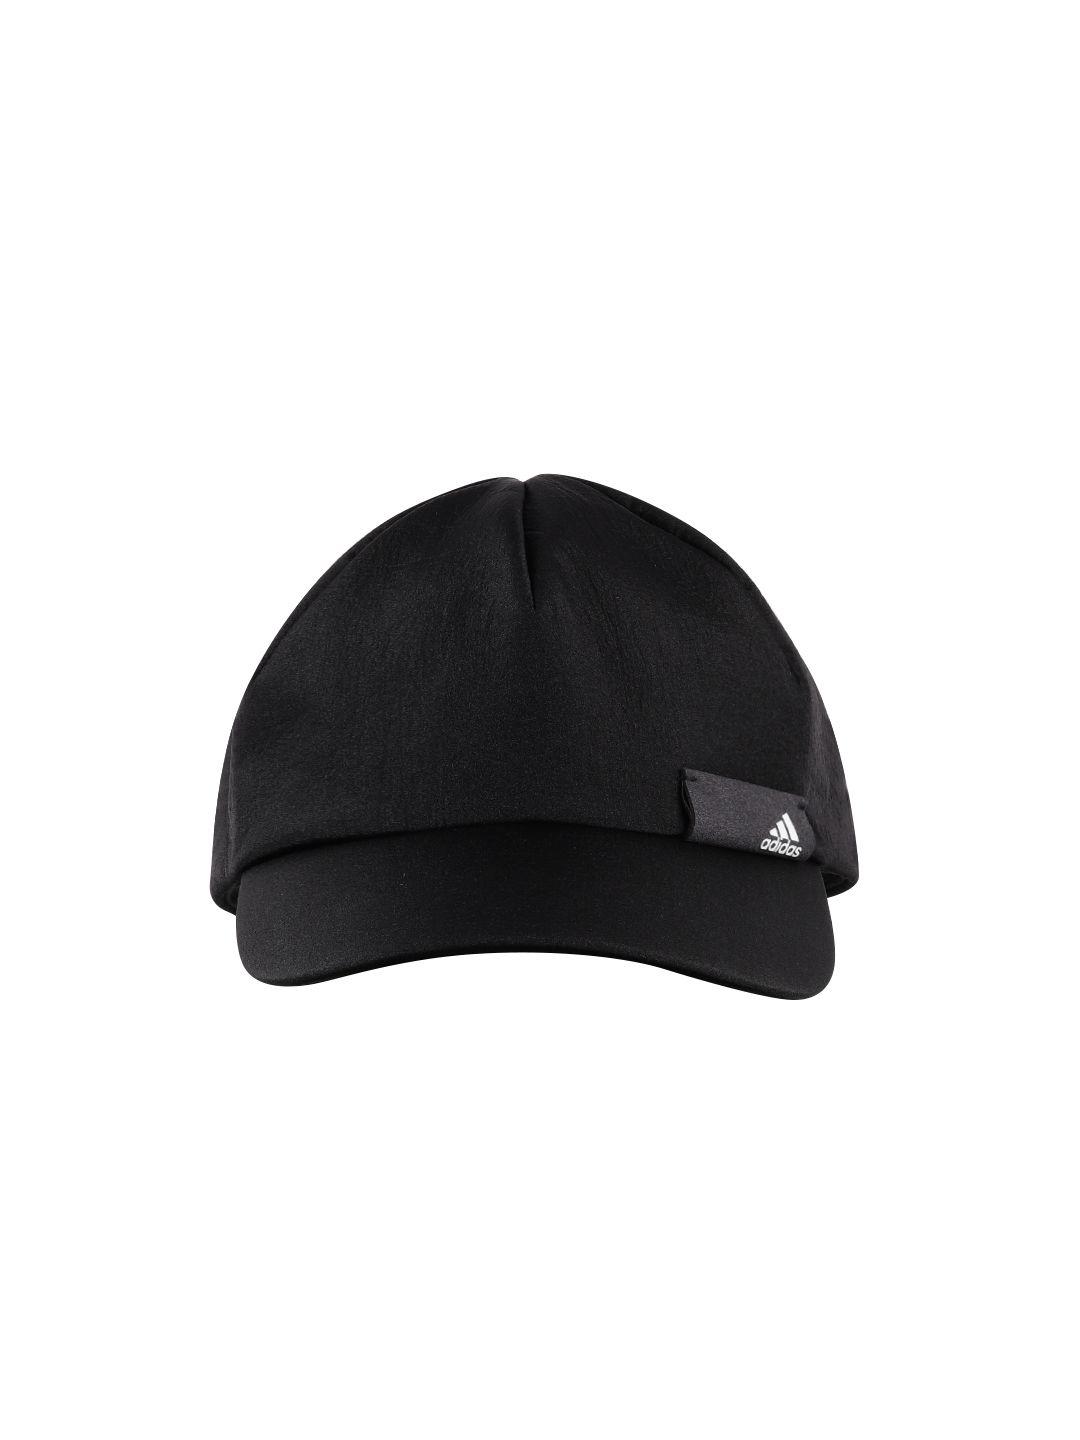 adidas unisex brand logo detail 4nwnl baseball cap